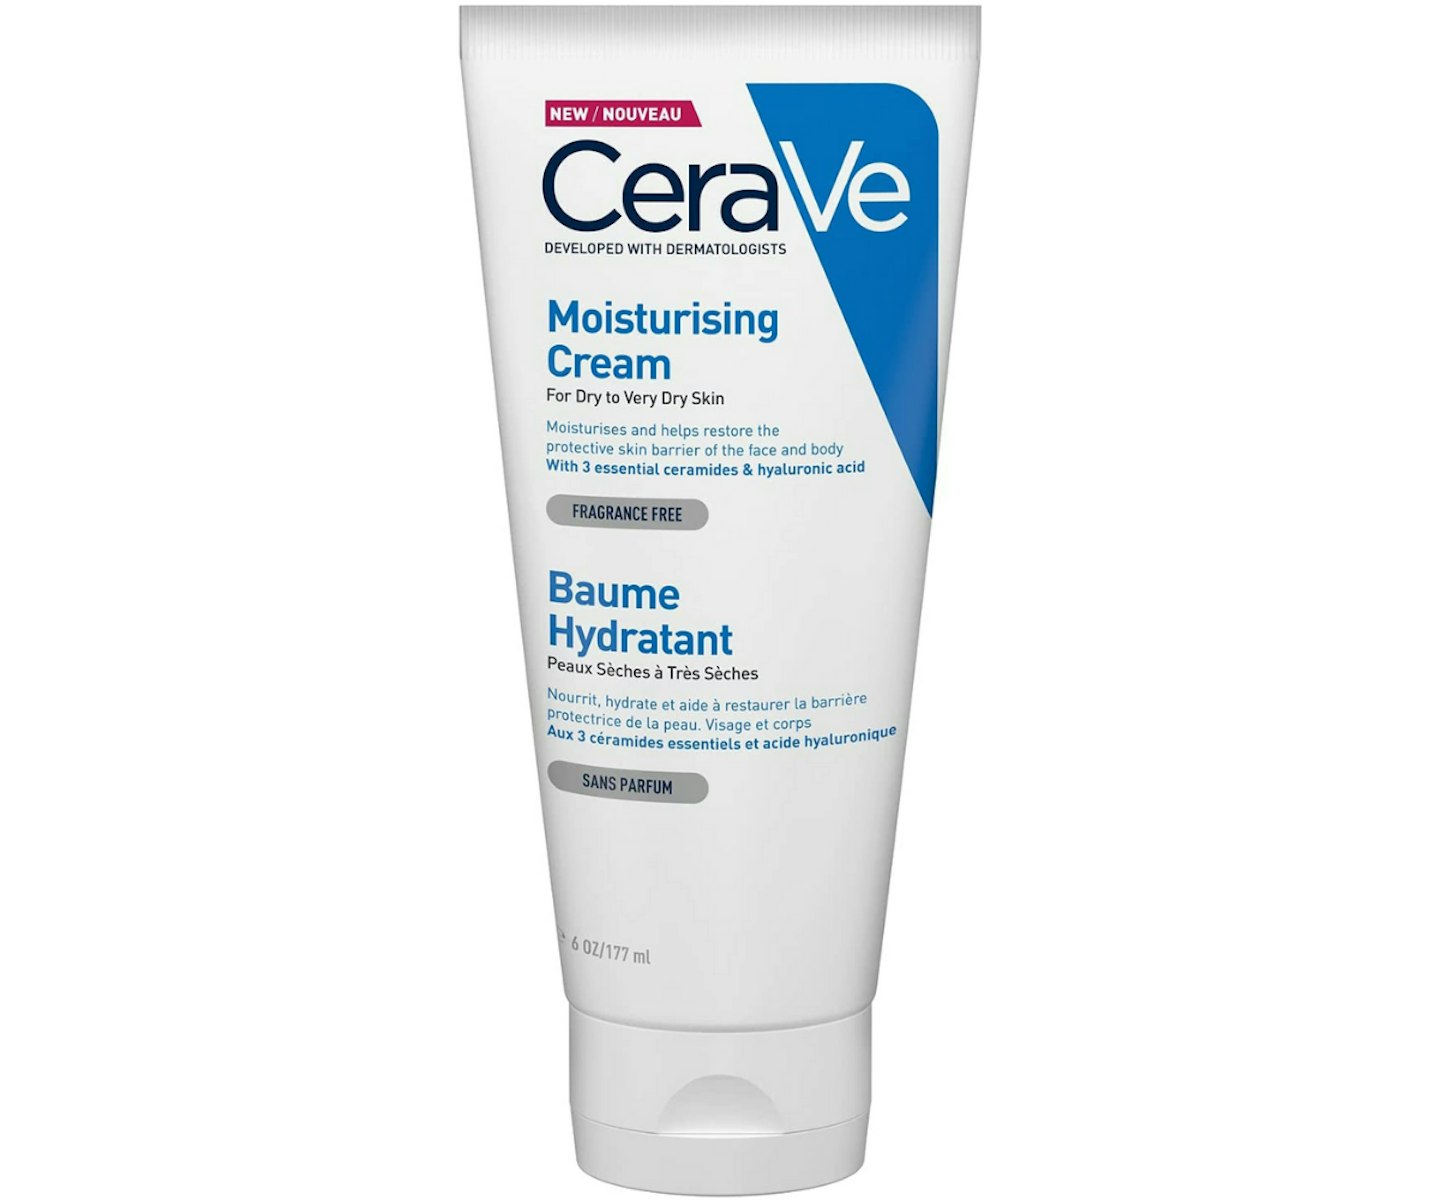 A picture of the CeraVe Moisturising Cream